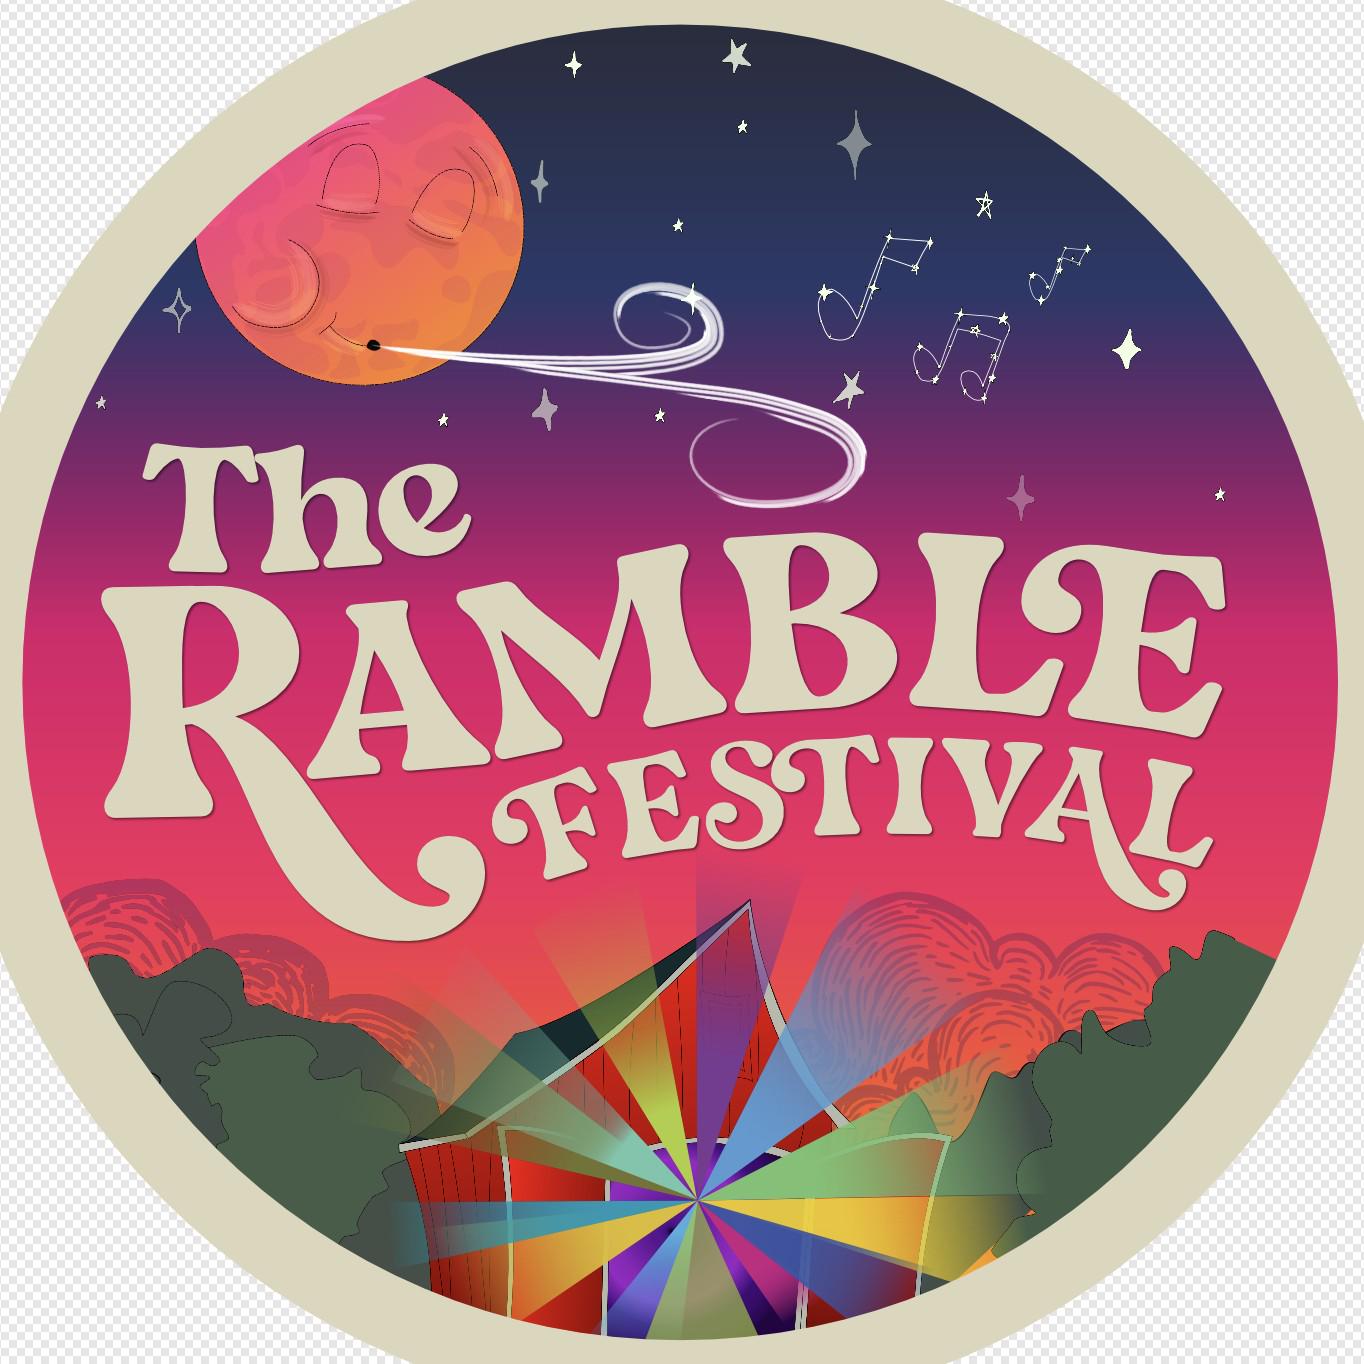 The Ramble Festival